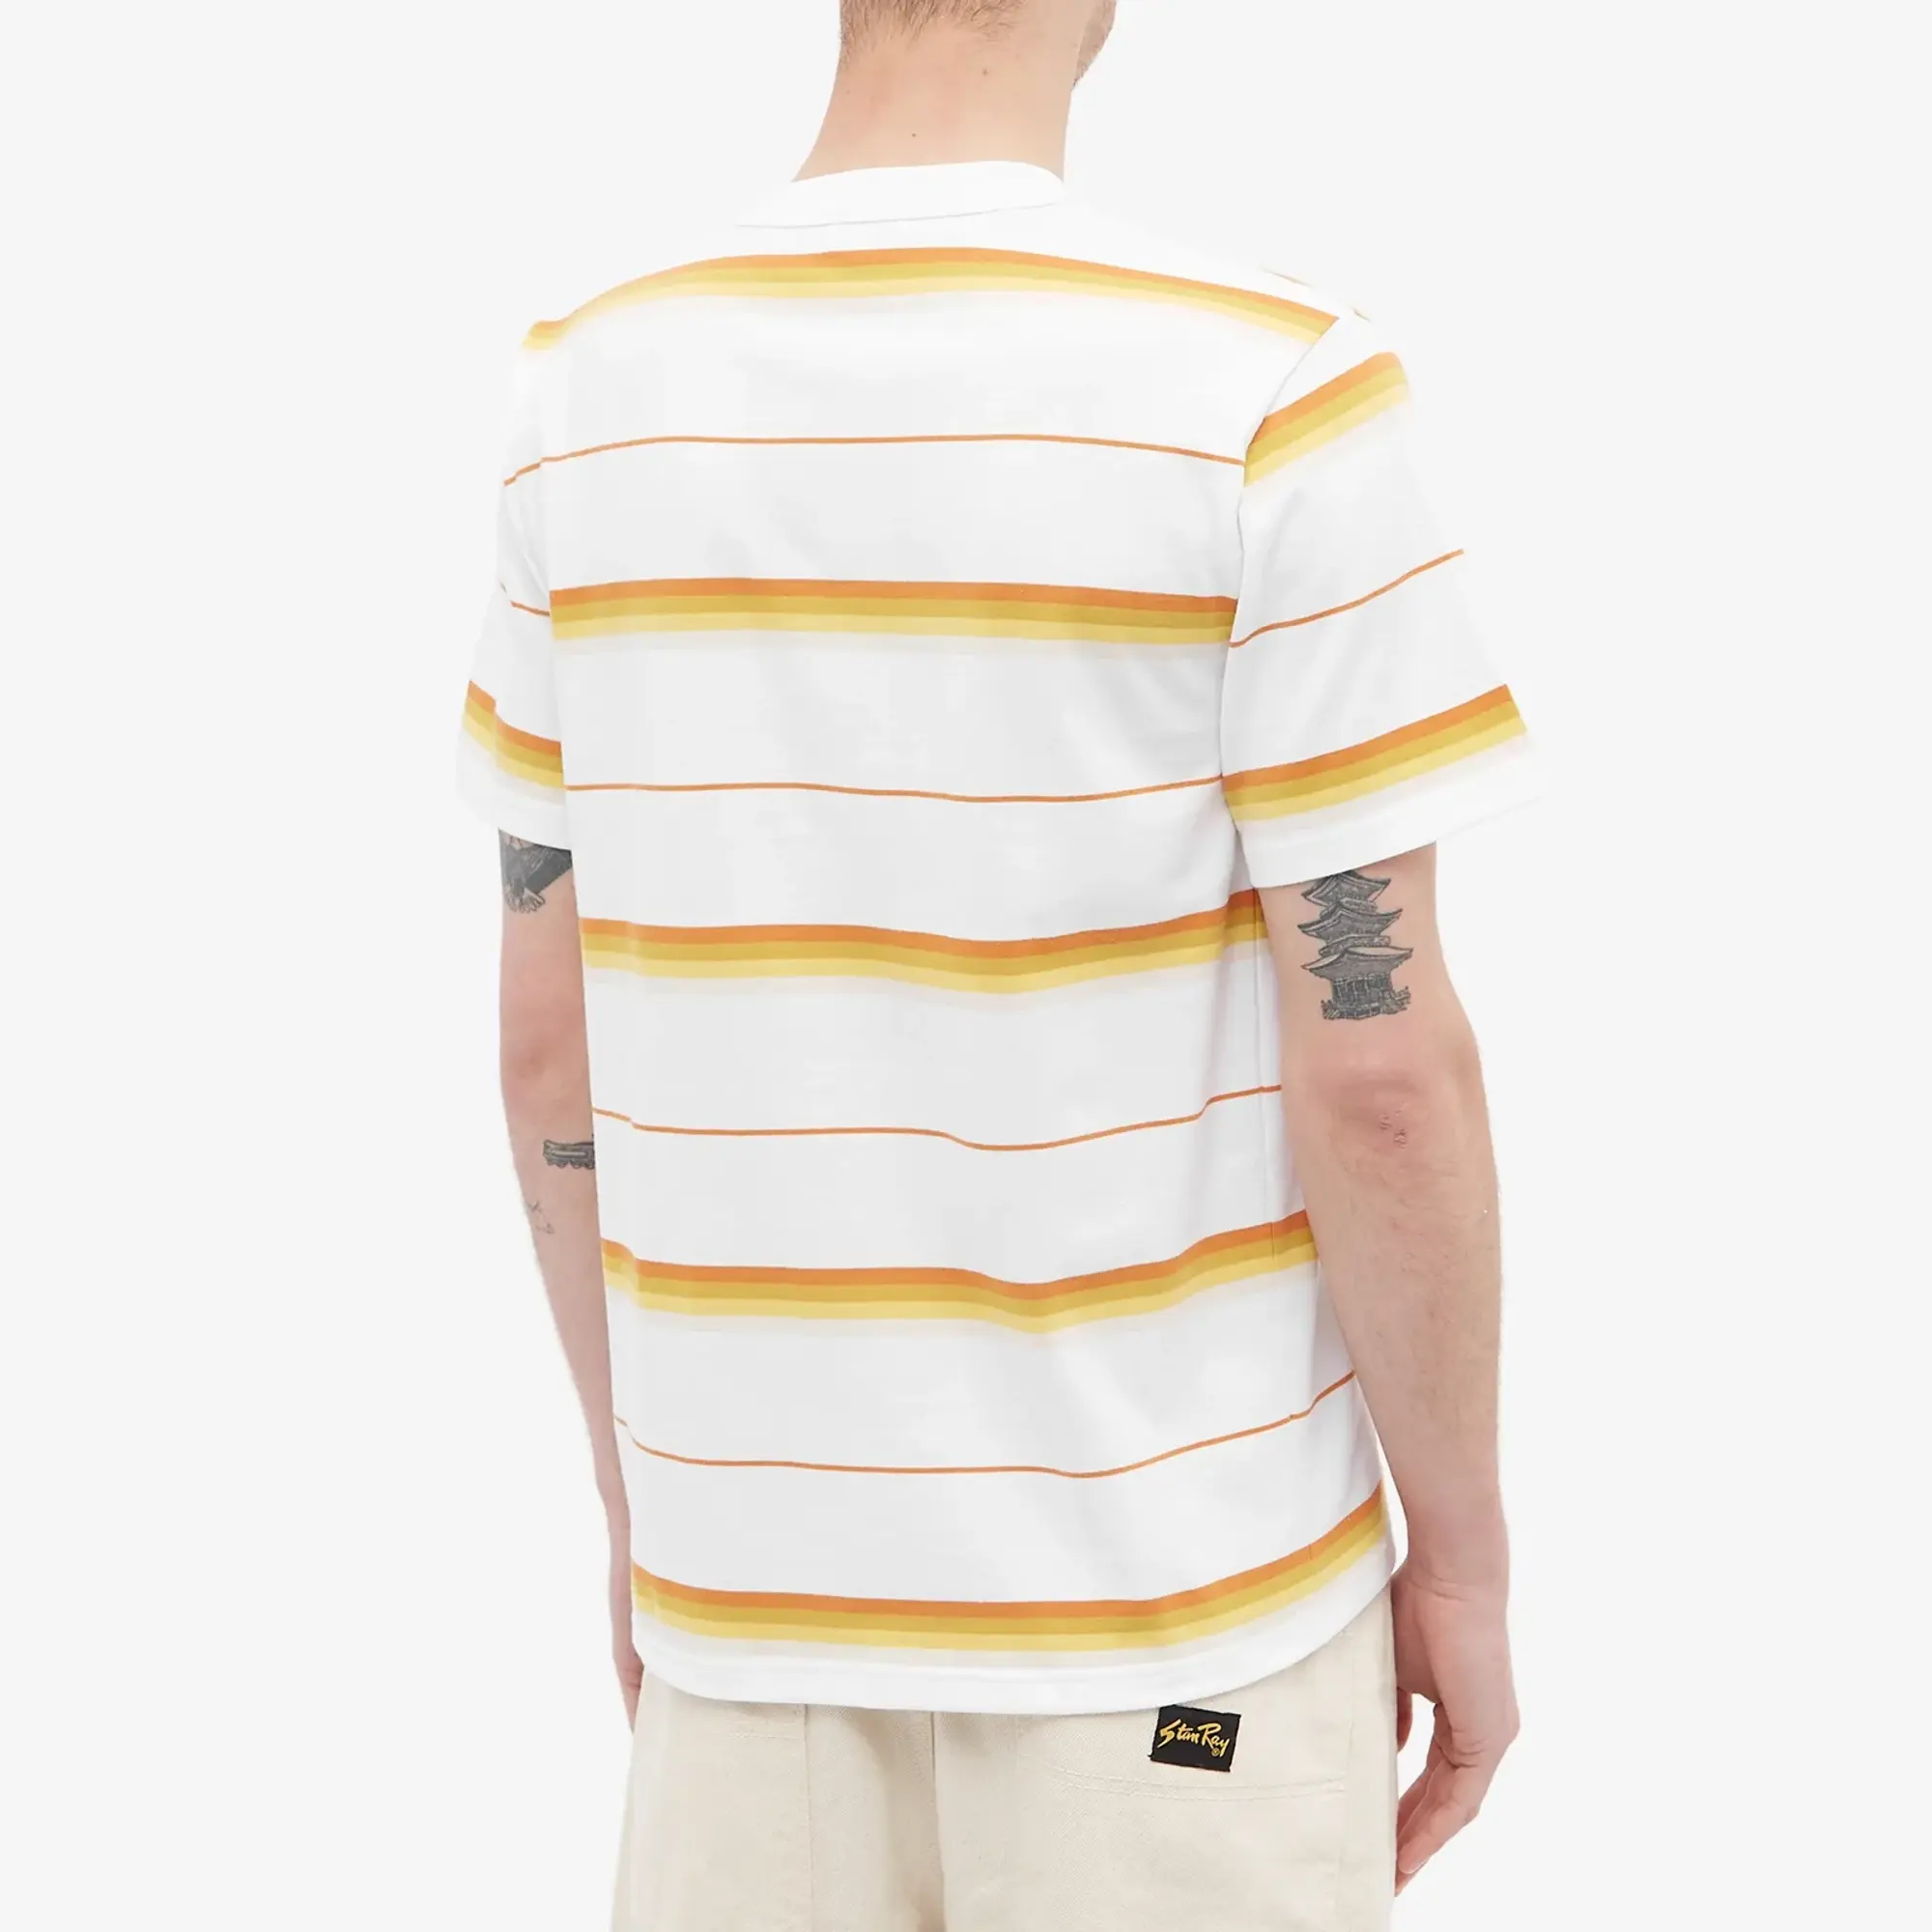 Armor-Lux Men's Stripe T-Shirt White/Yellow/Rusty